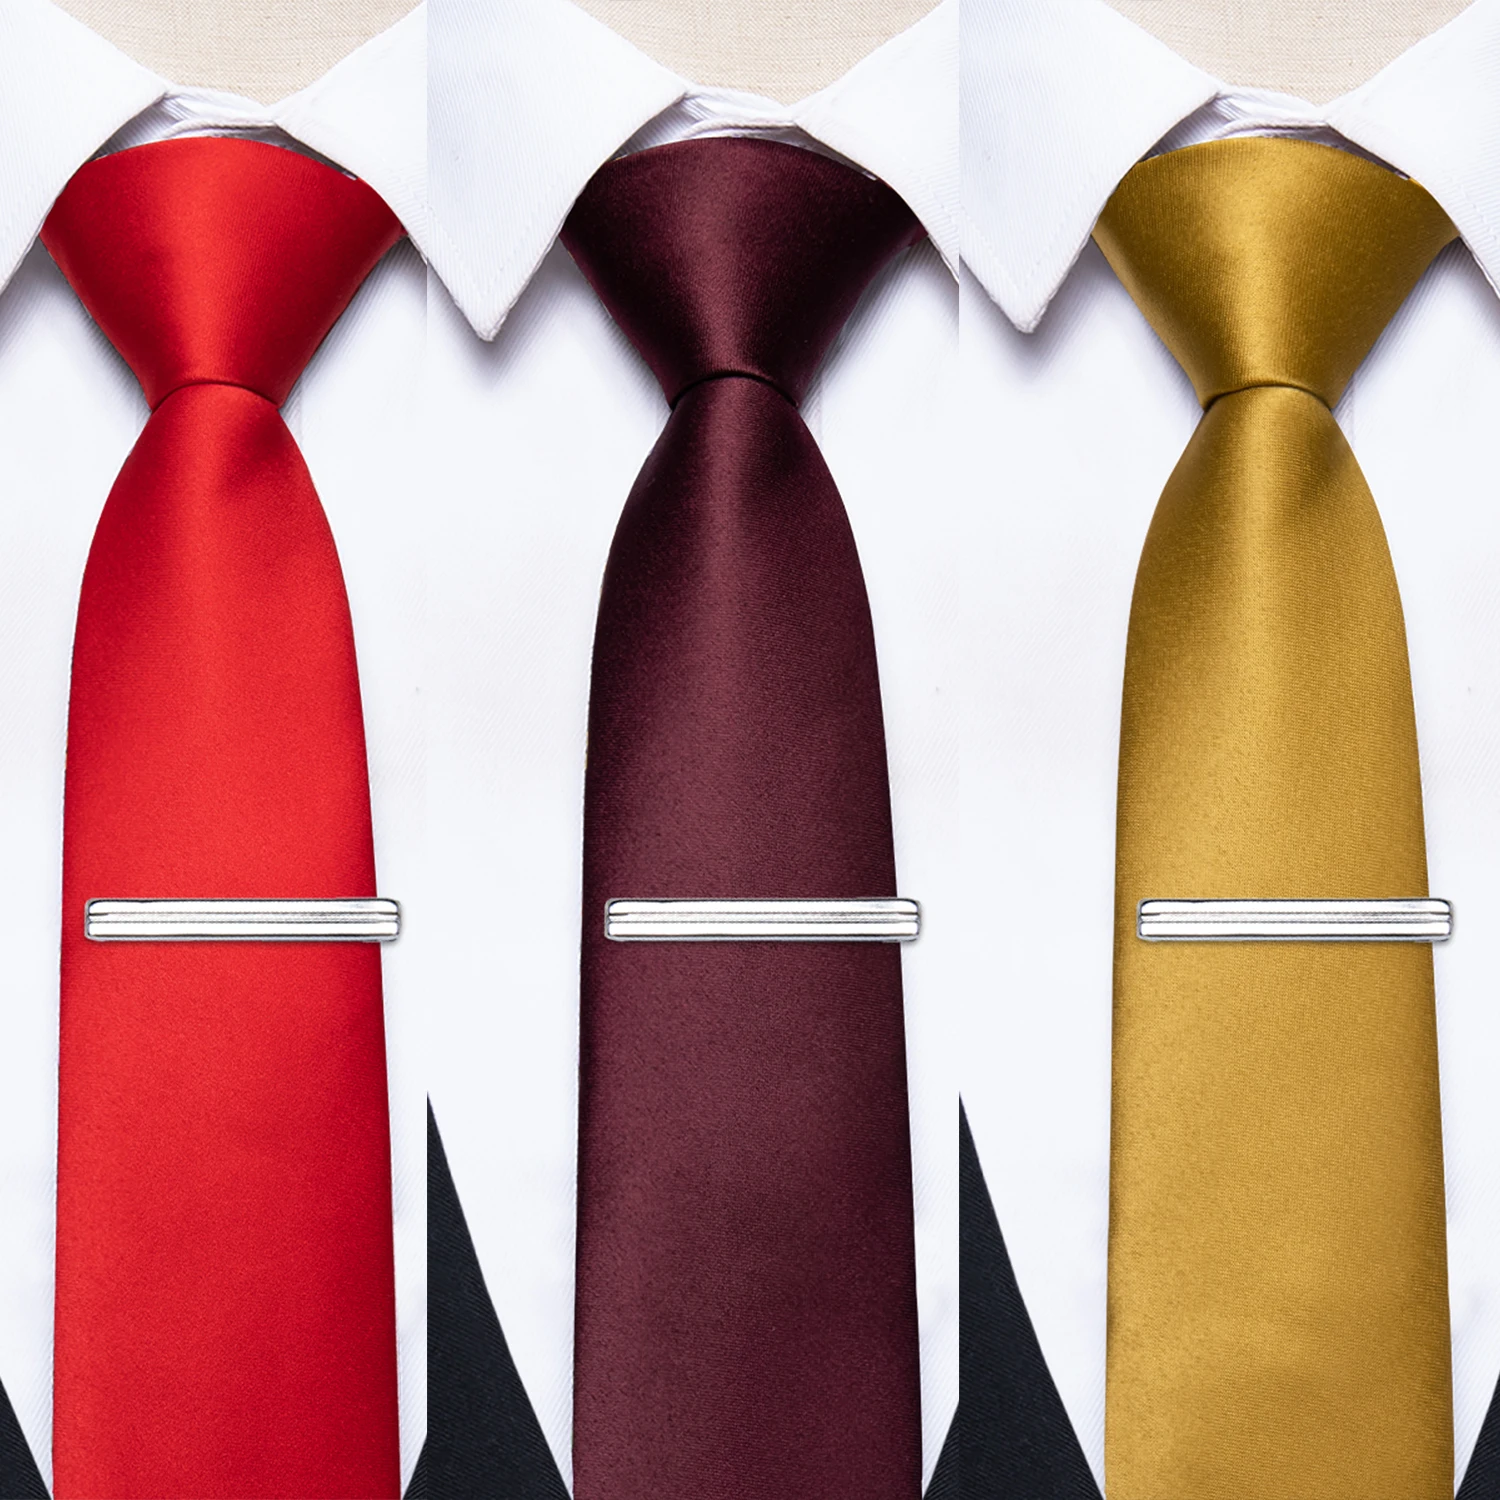 

Satin Men's Red Burgundy Gold Necktie for Business Wedding Party Fashion Silk Slim 6.5 CM Tie Pocket Square Sets 3 PCS/lot Ties